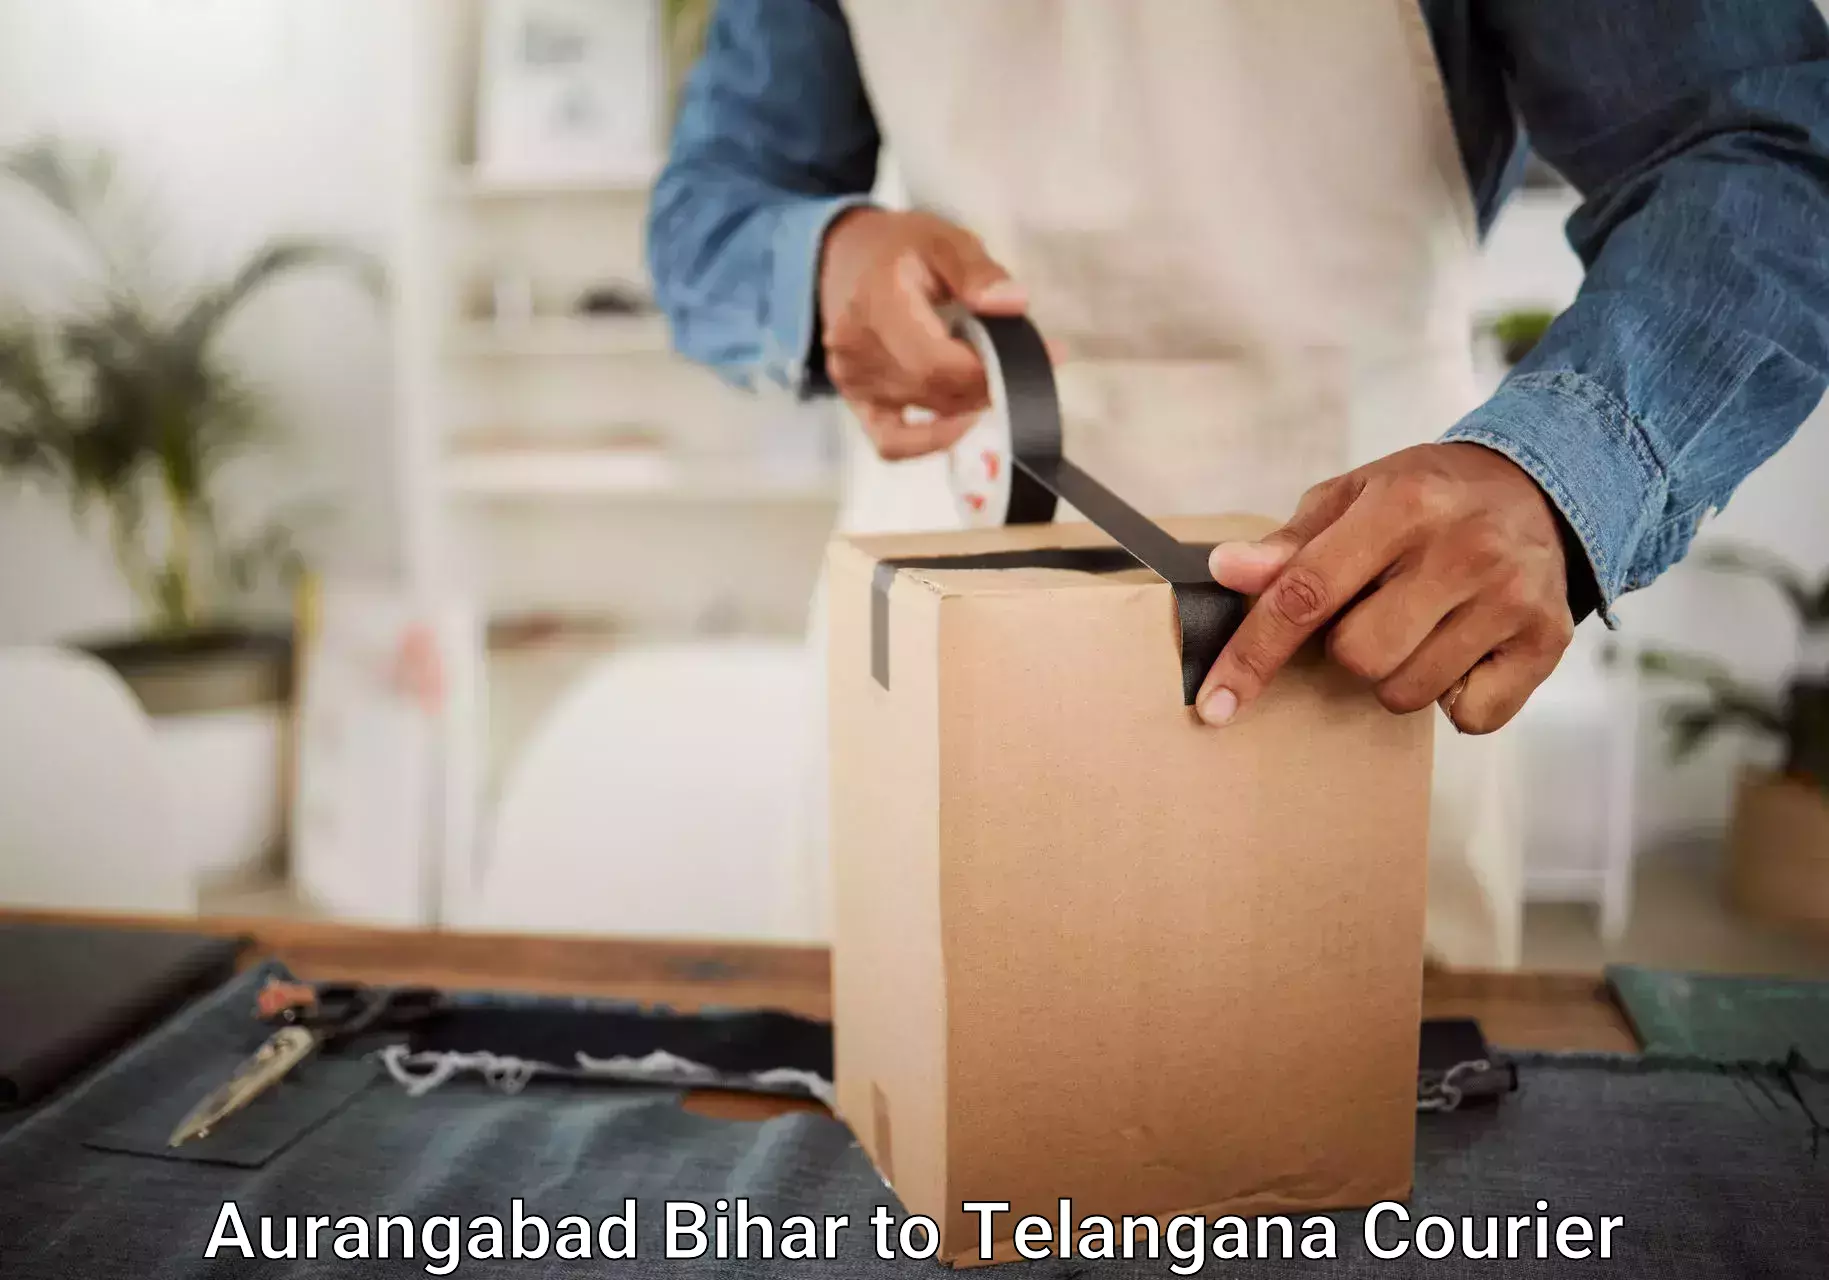 Luggage transport consultancy Aurangabad Bihar to Khairatabad